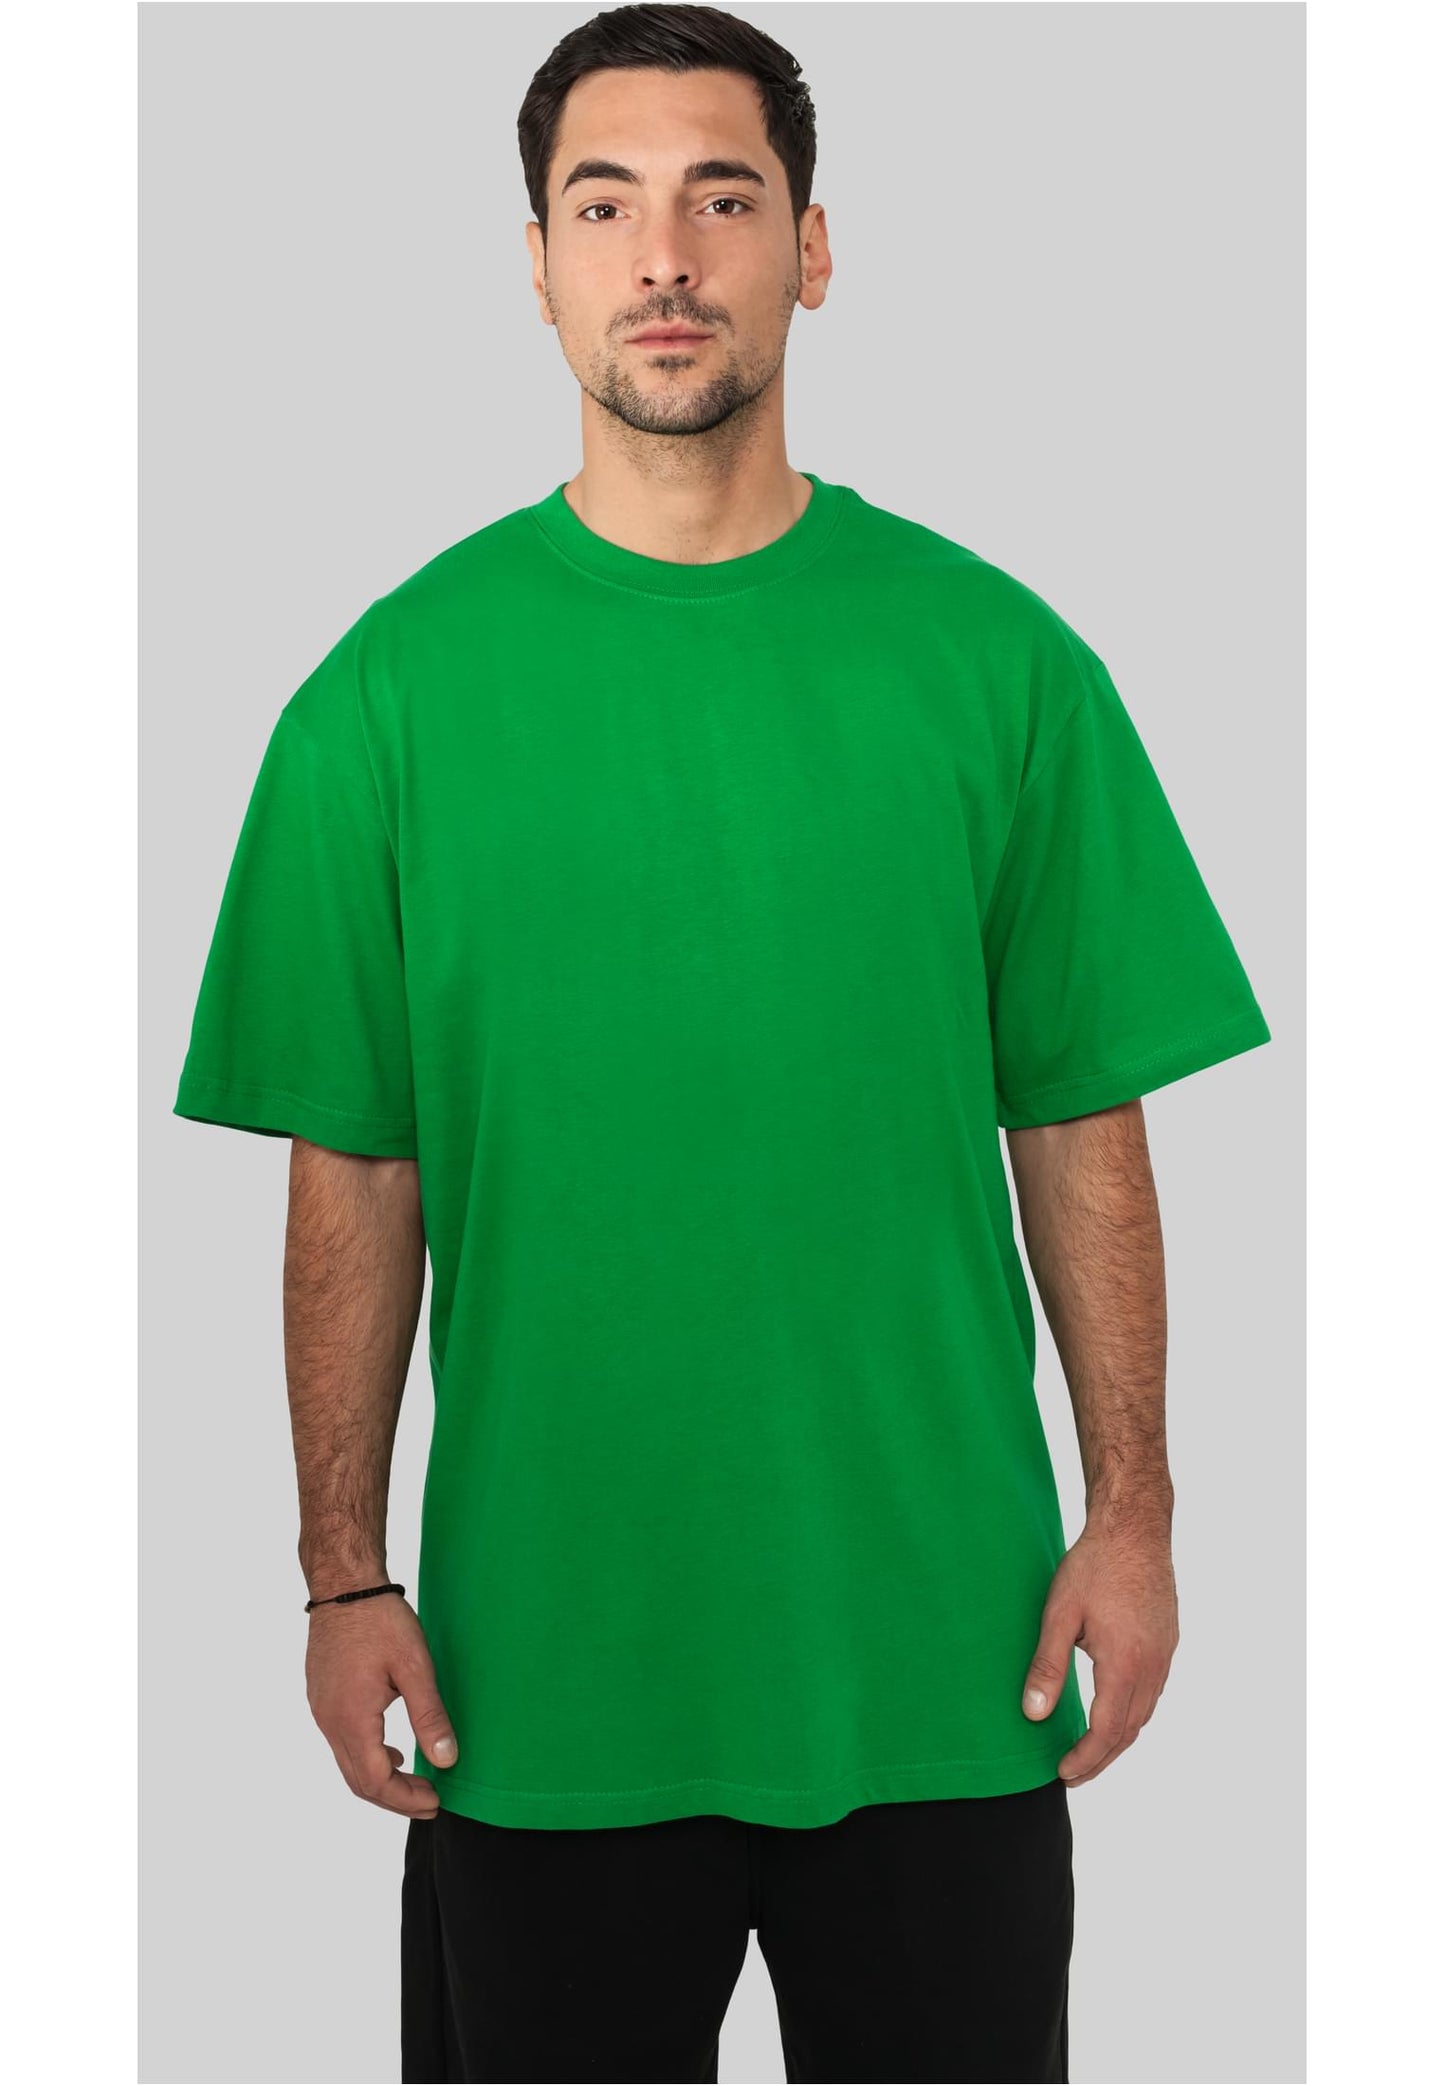 Urban Classics Tall T-Shirt Baggy / Loose Fit in C green